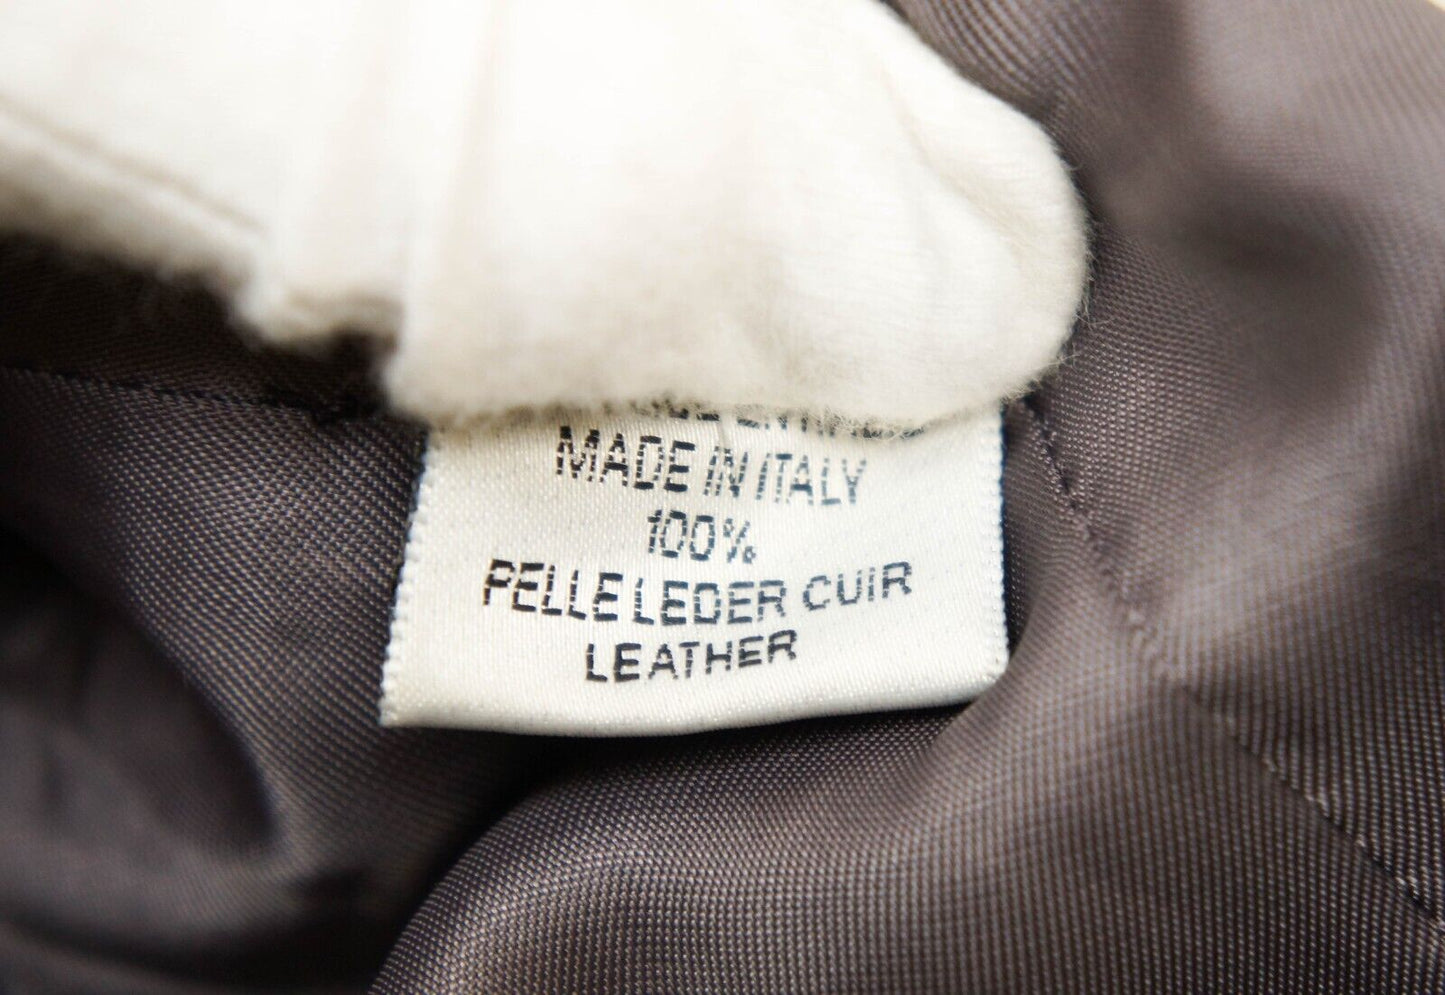 FENDI Maglia Fur Jacket Coat Vintage Gray Rare 90s